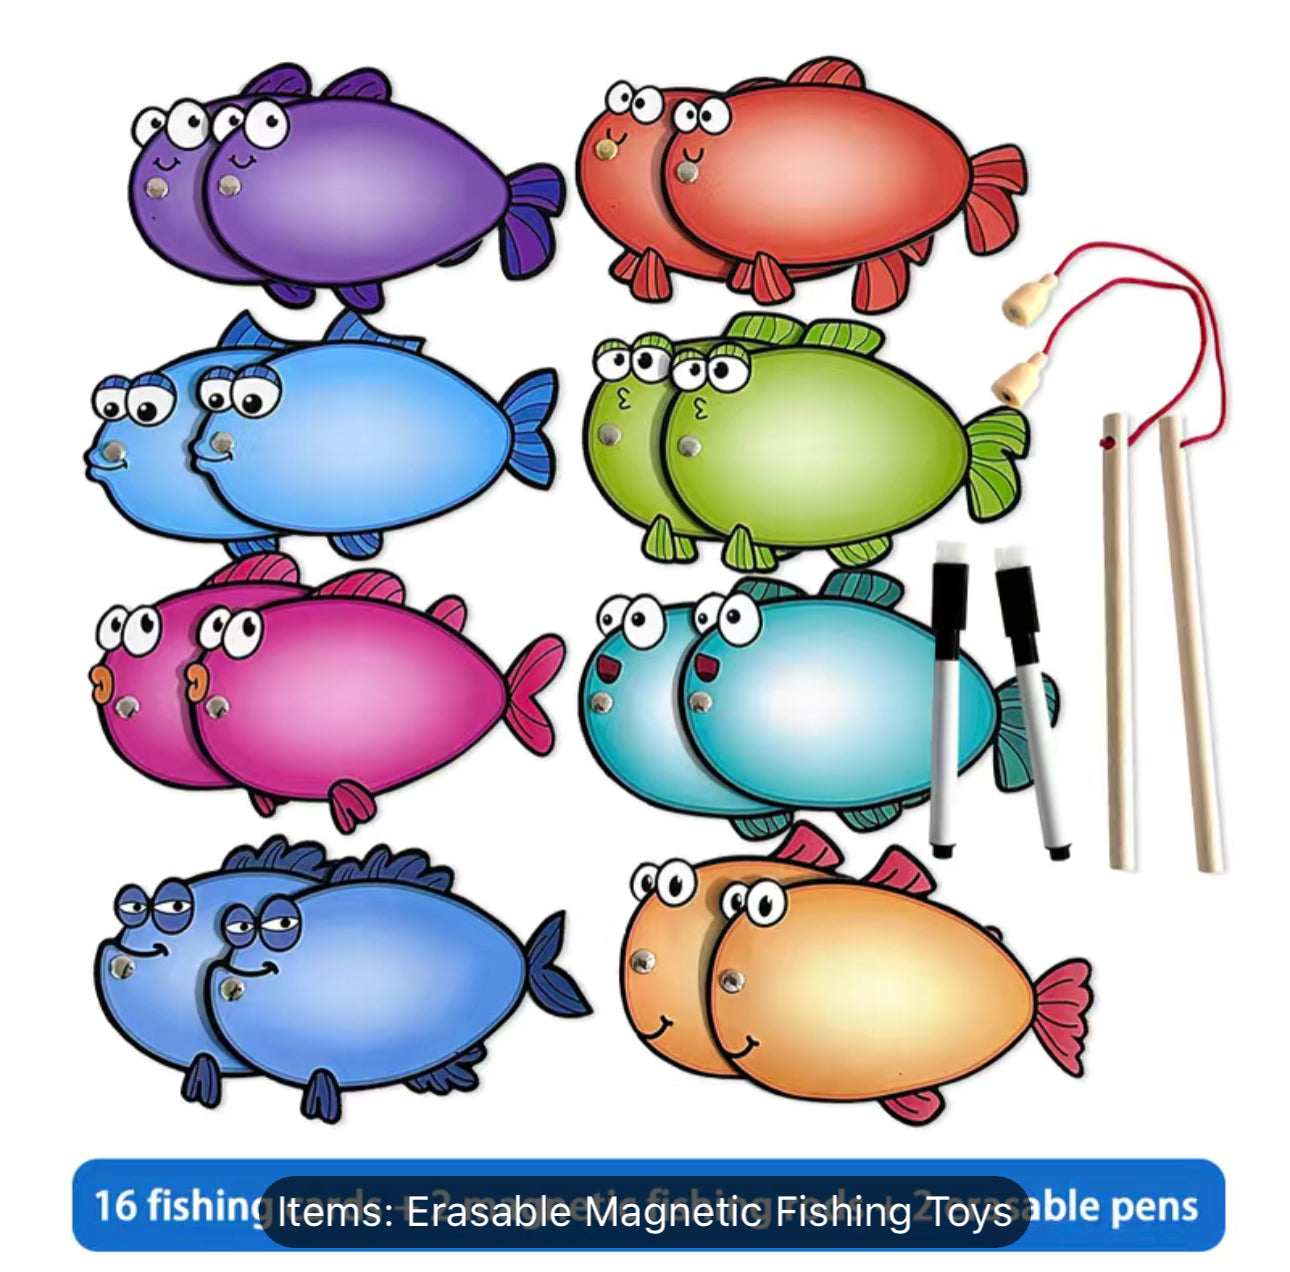 Erasable Magnetic Fishing Toys